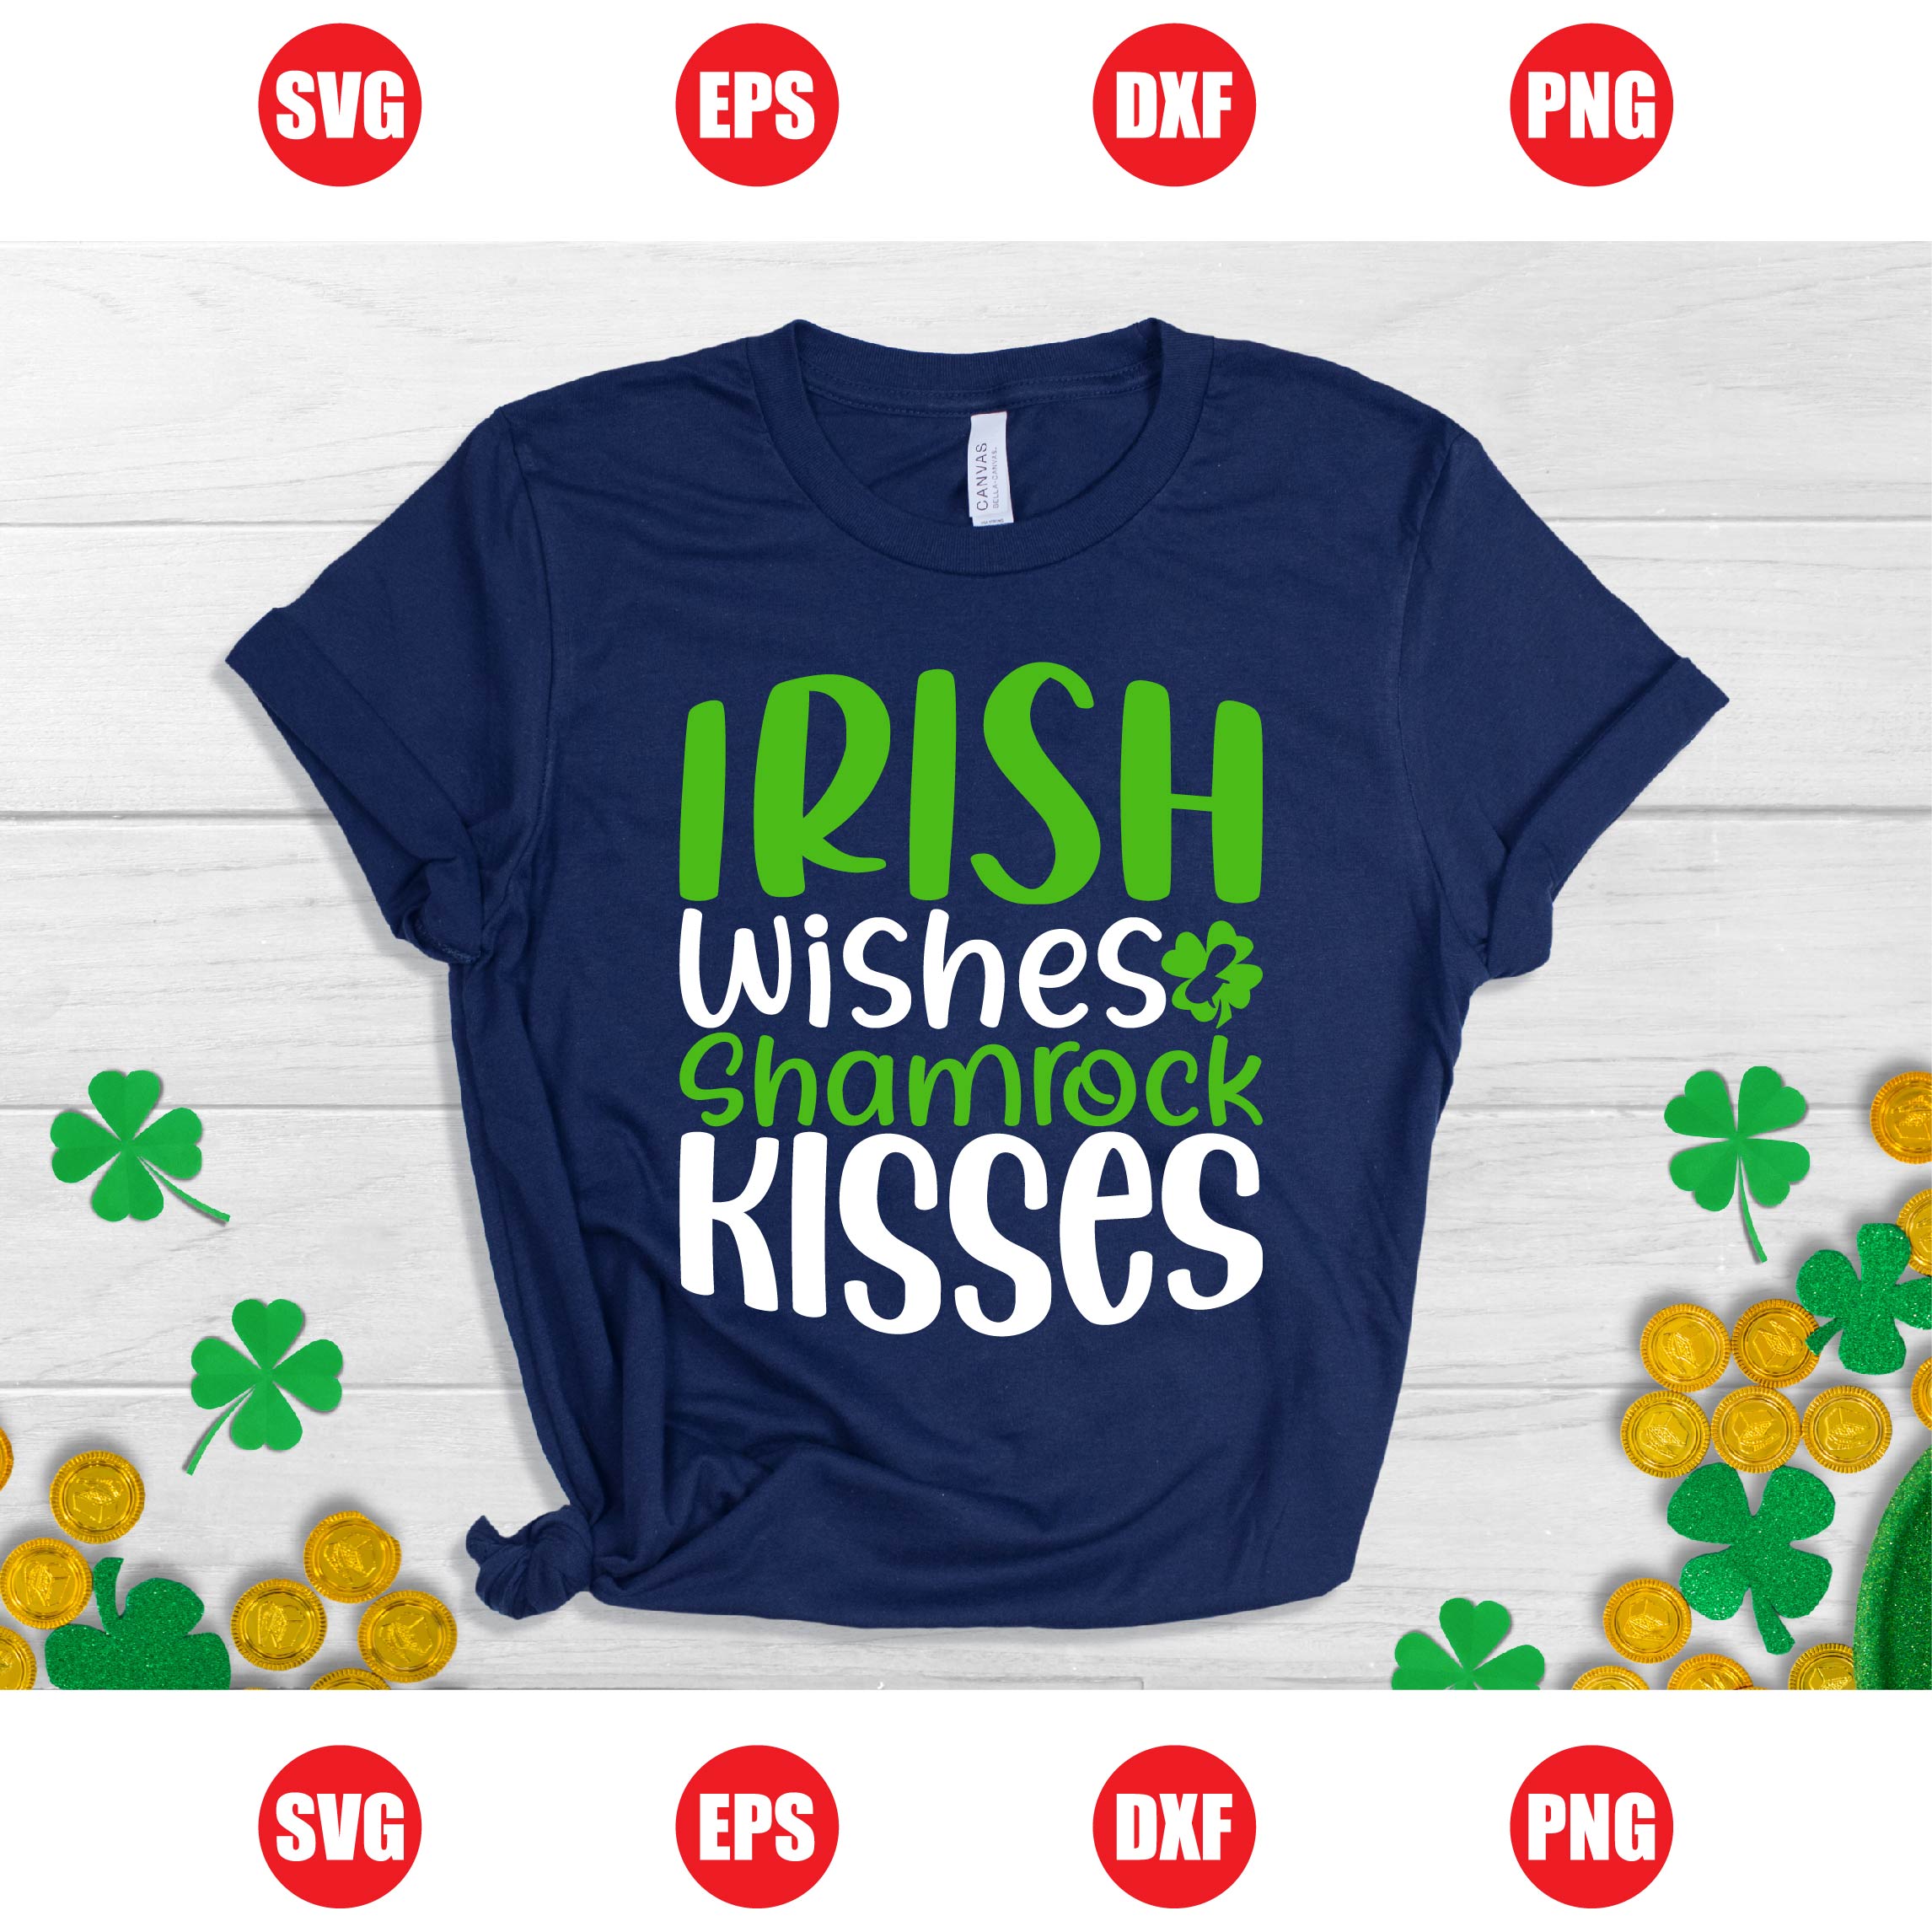 Irish Wishes & Shamrock Kisses T-shirt Design preview image.